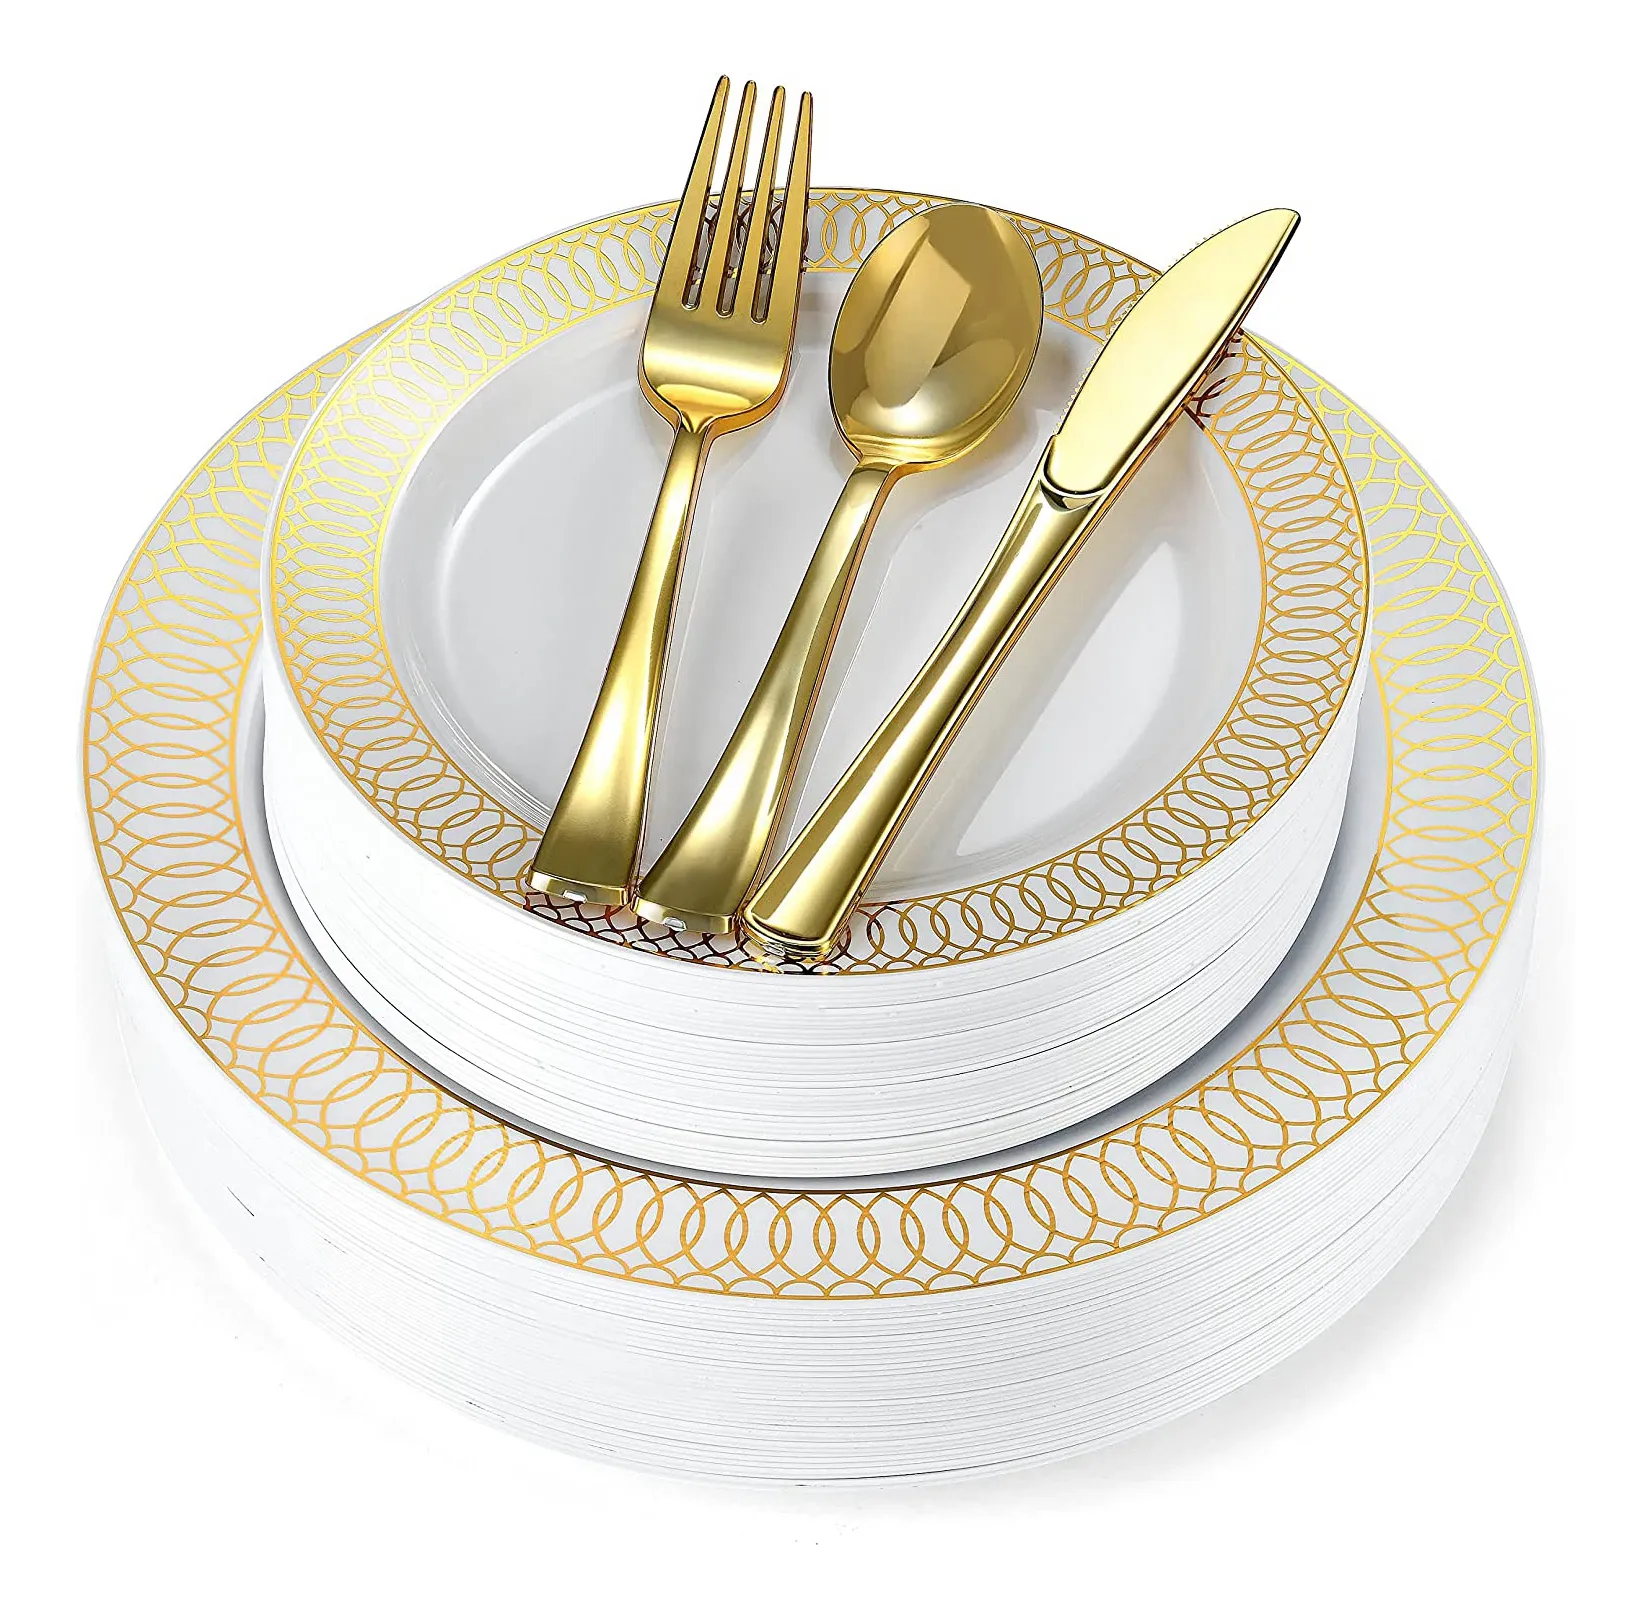 Wegwerp Plastic Fancy Bloem Ontwerp Gold Stamped Lader Platen Servies Sets Voor Party